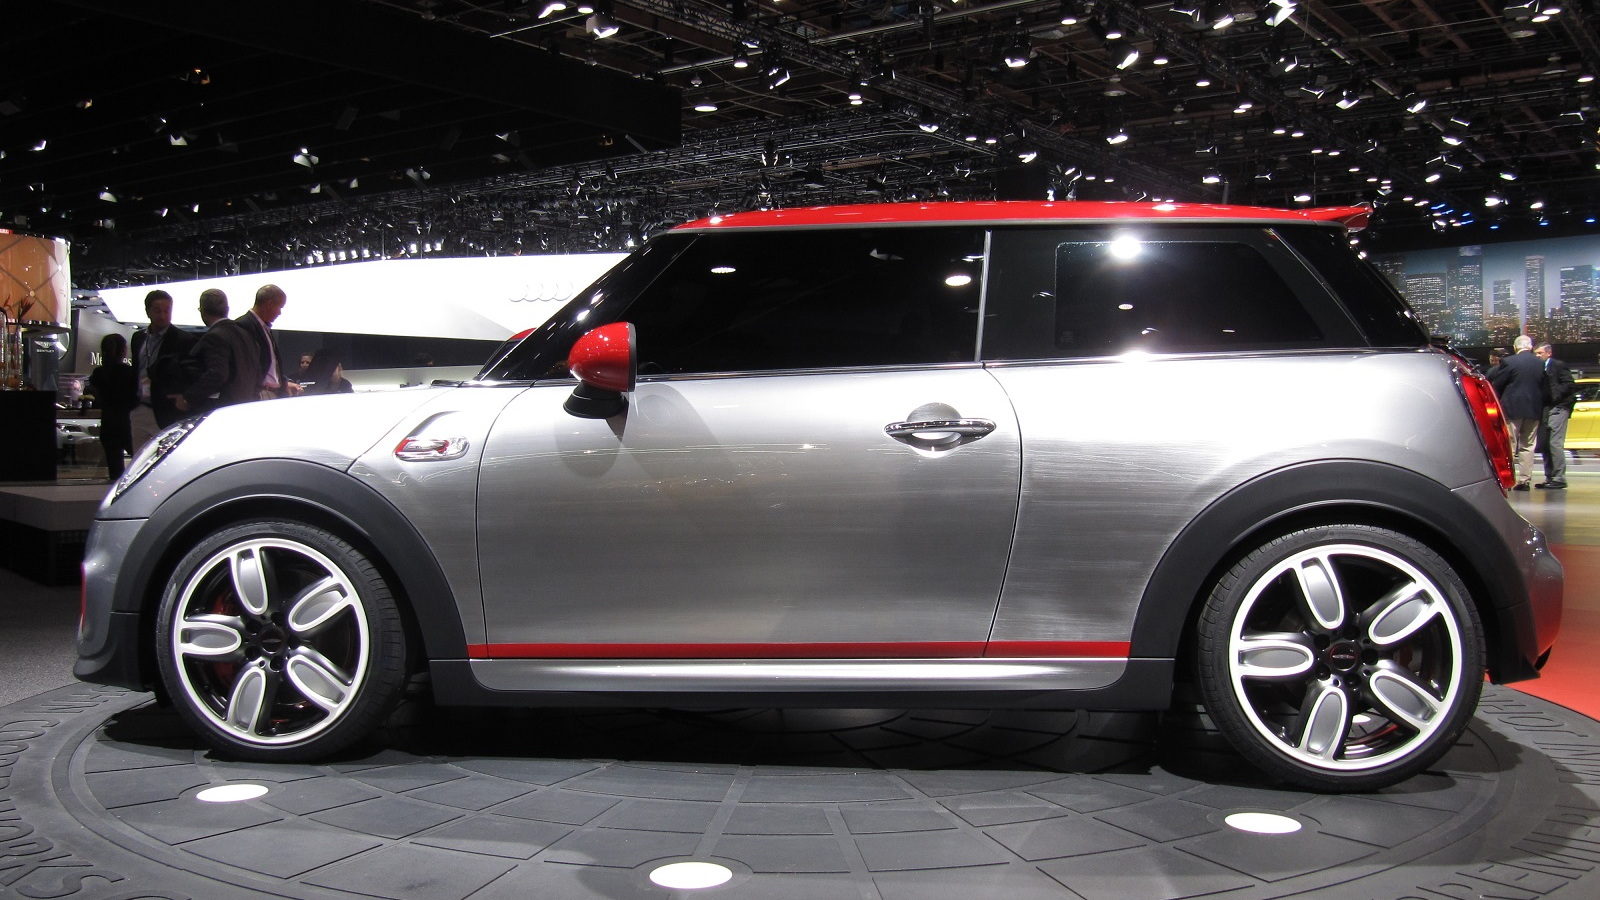 MINI John Cooper Works concept, unveiled at 2014 Detroit Auto Show